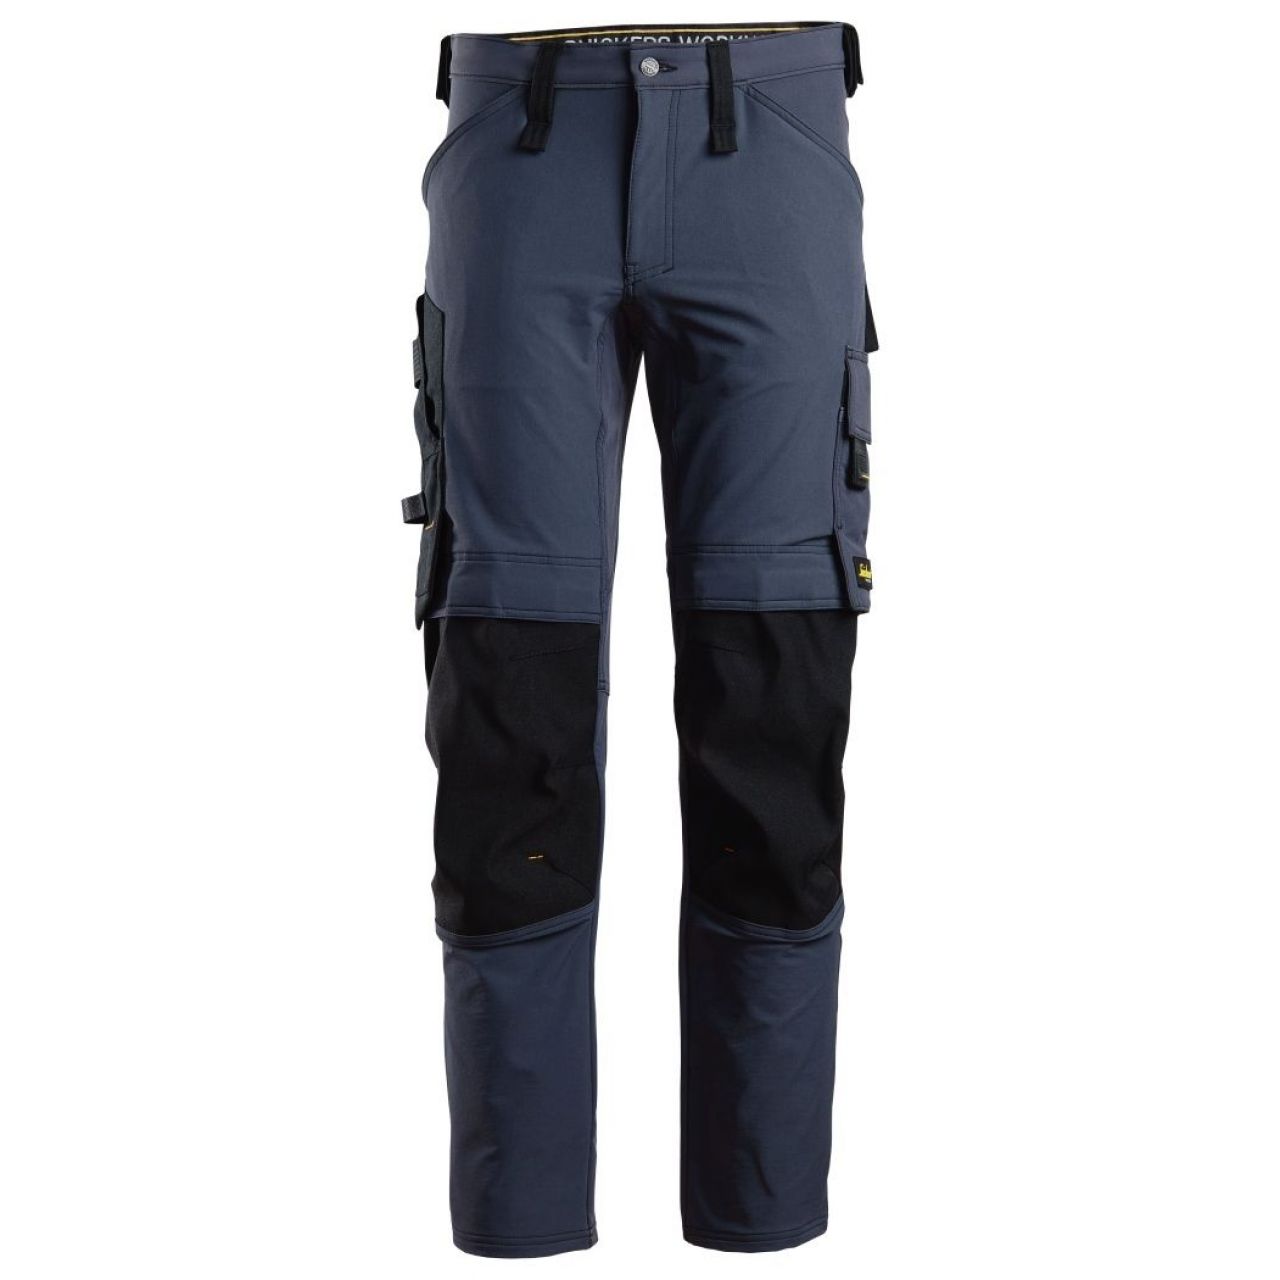 Pantalon elastico AllroundWork azul marino-negro talla 096